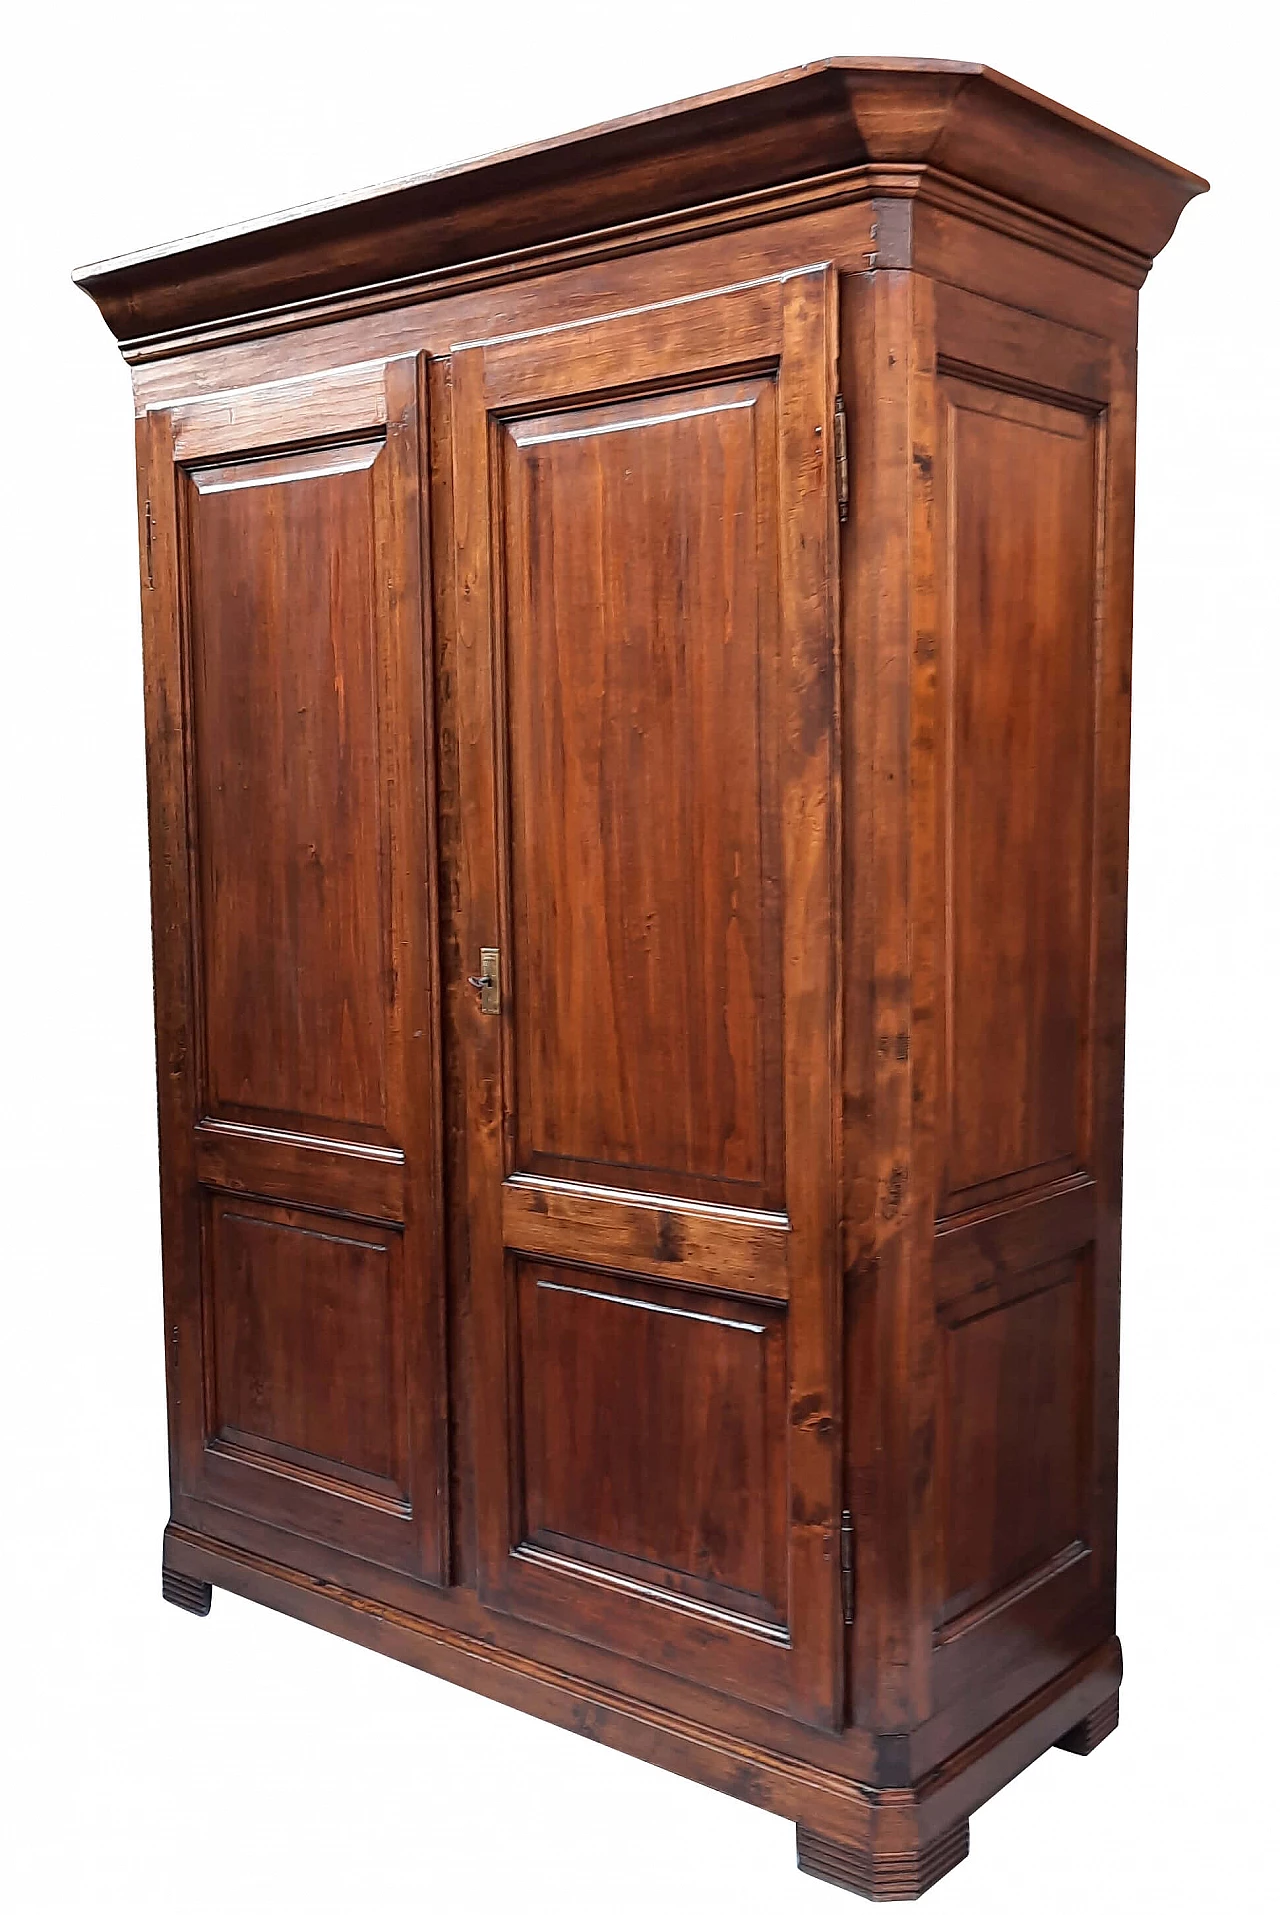 Poplar closet with two doors, 1940s 1332499